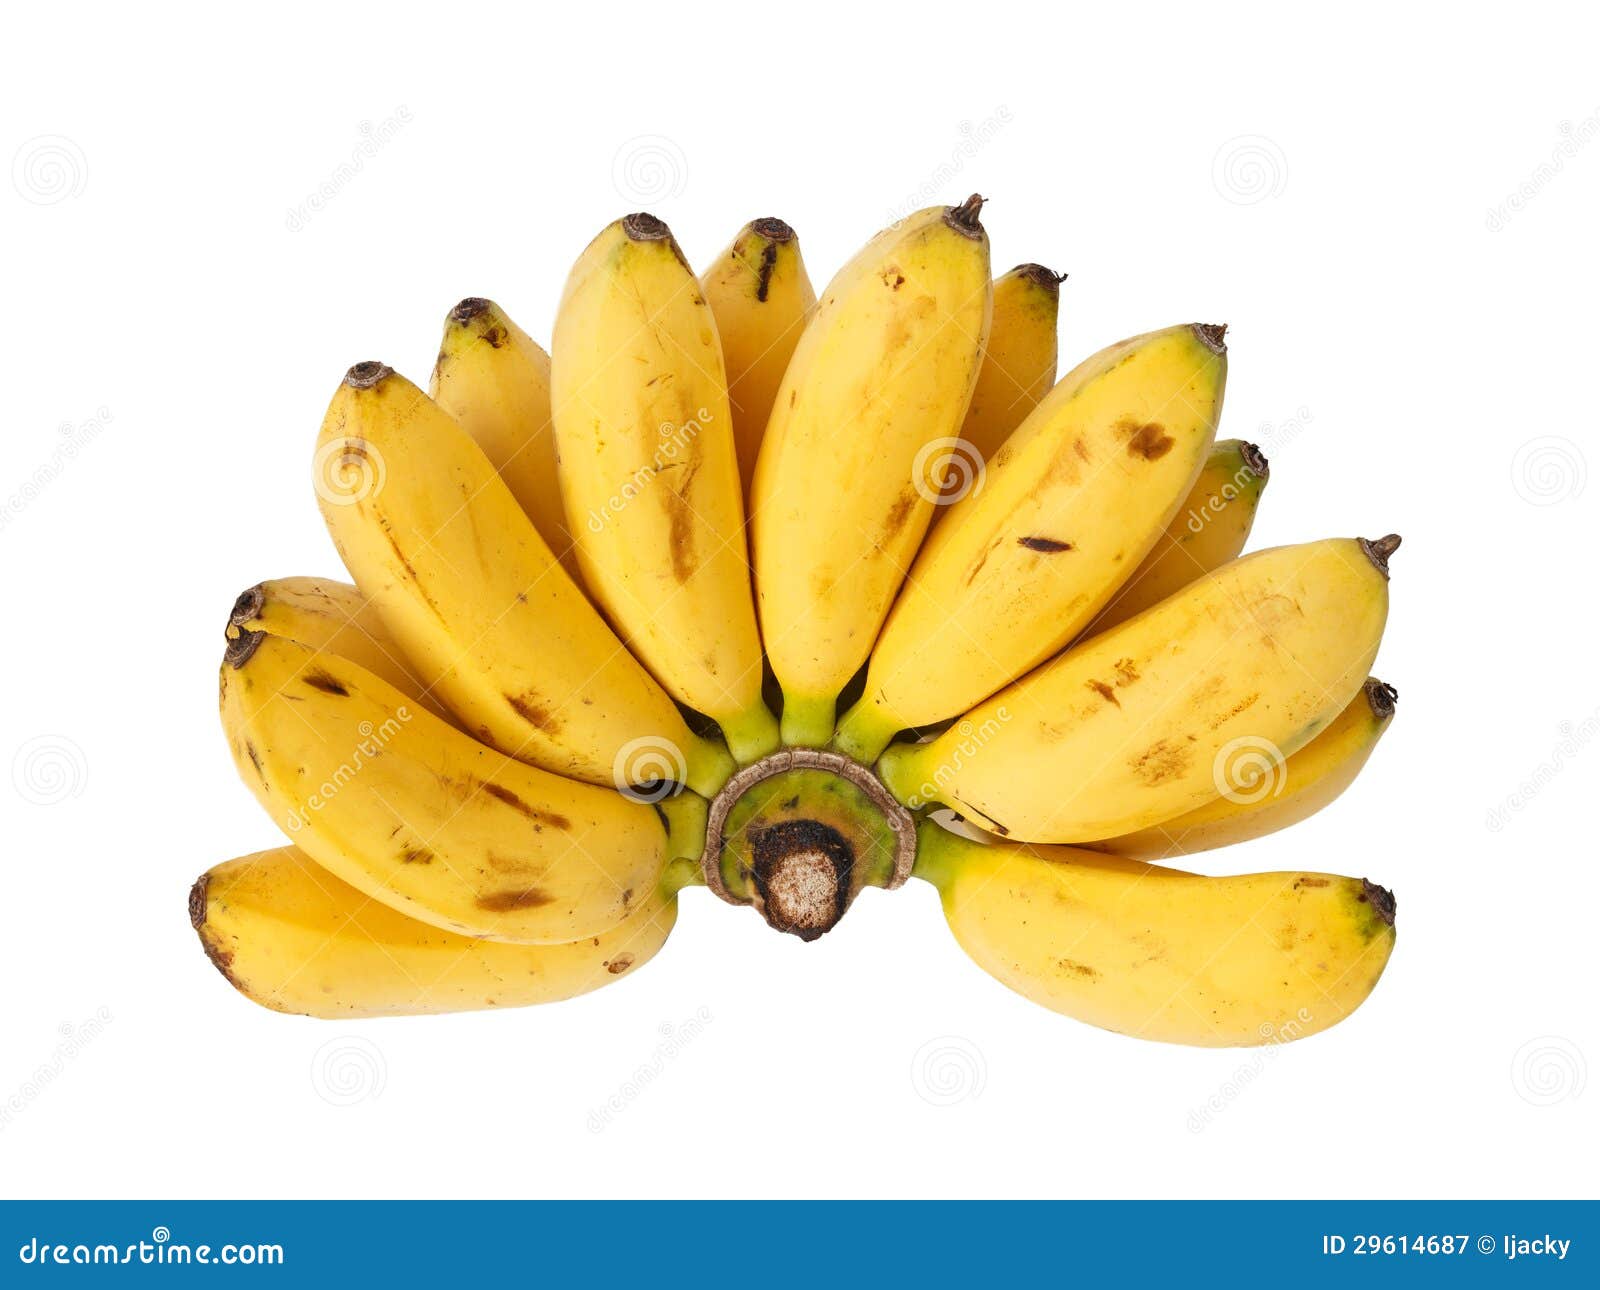 bunch of baby banana